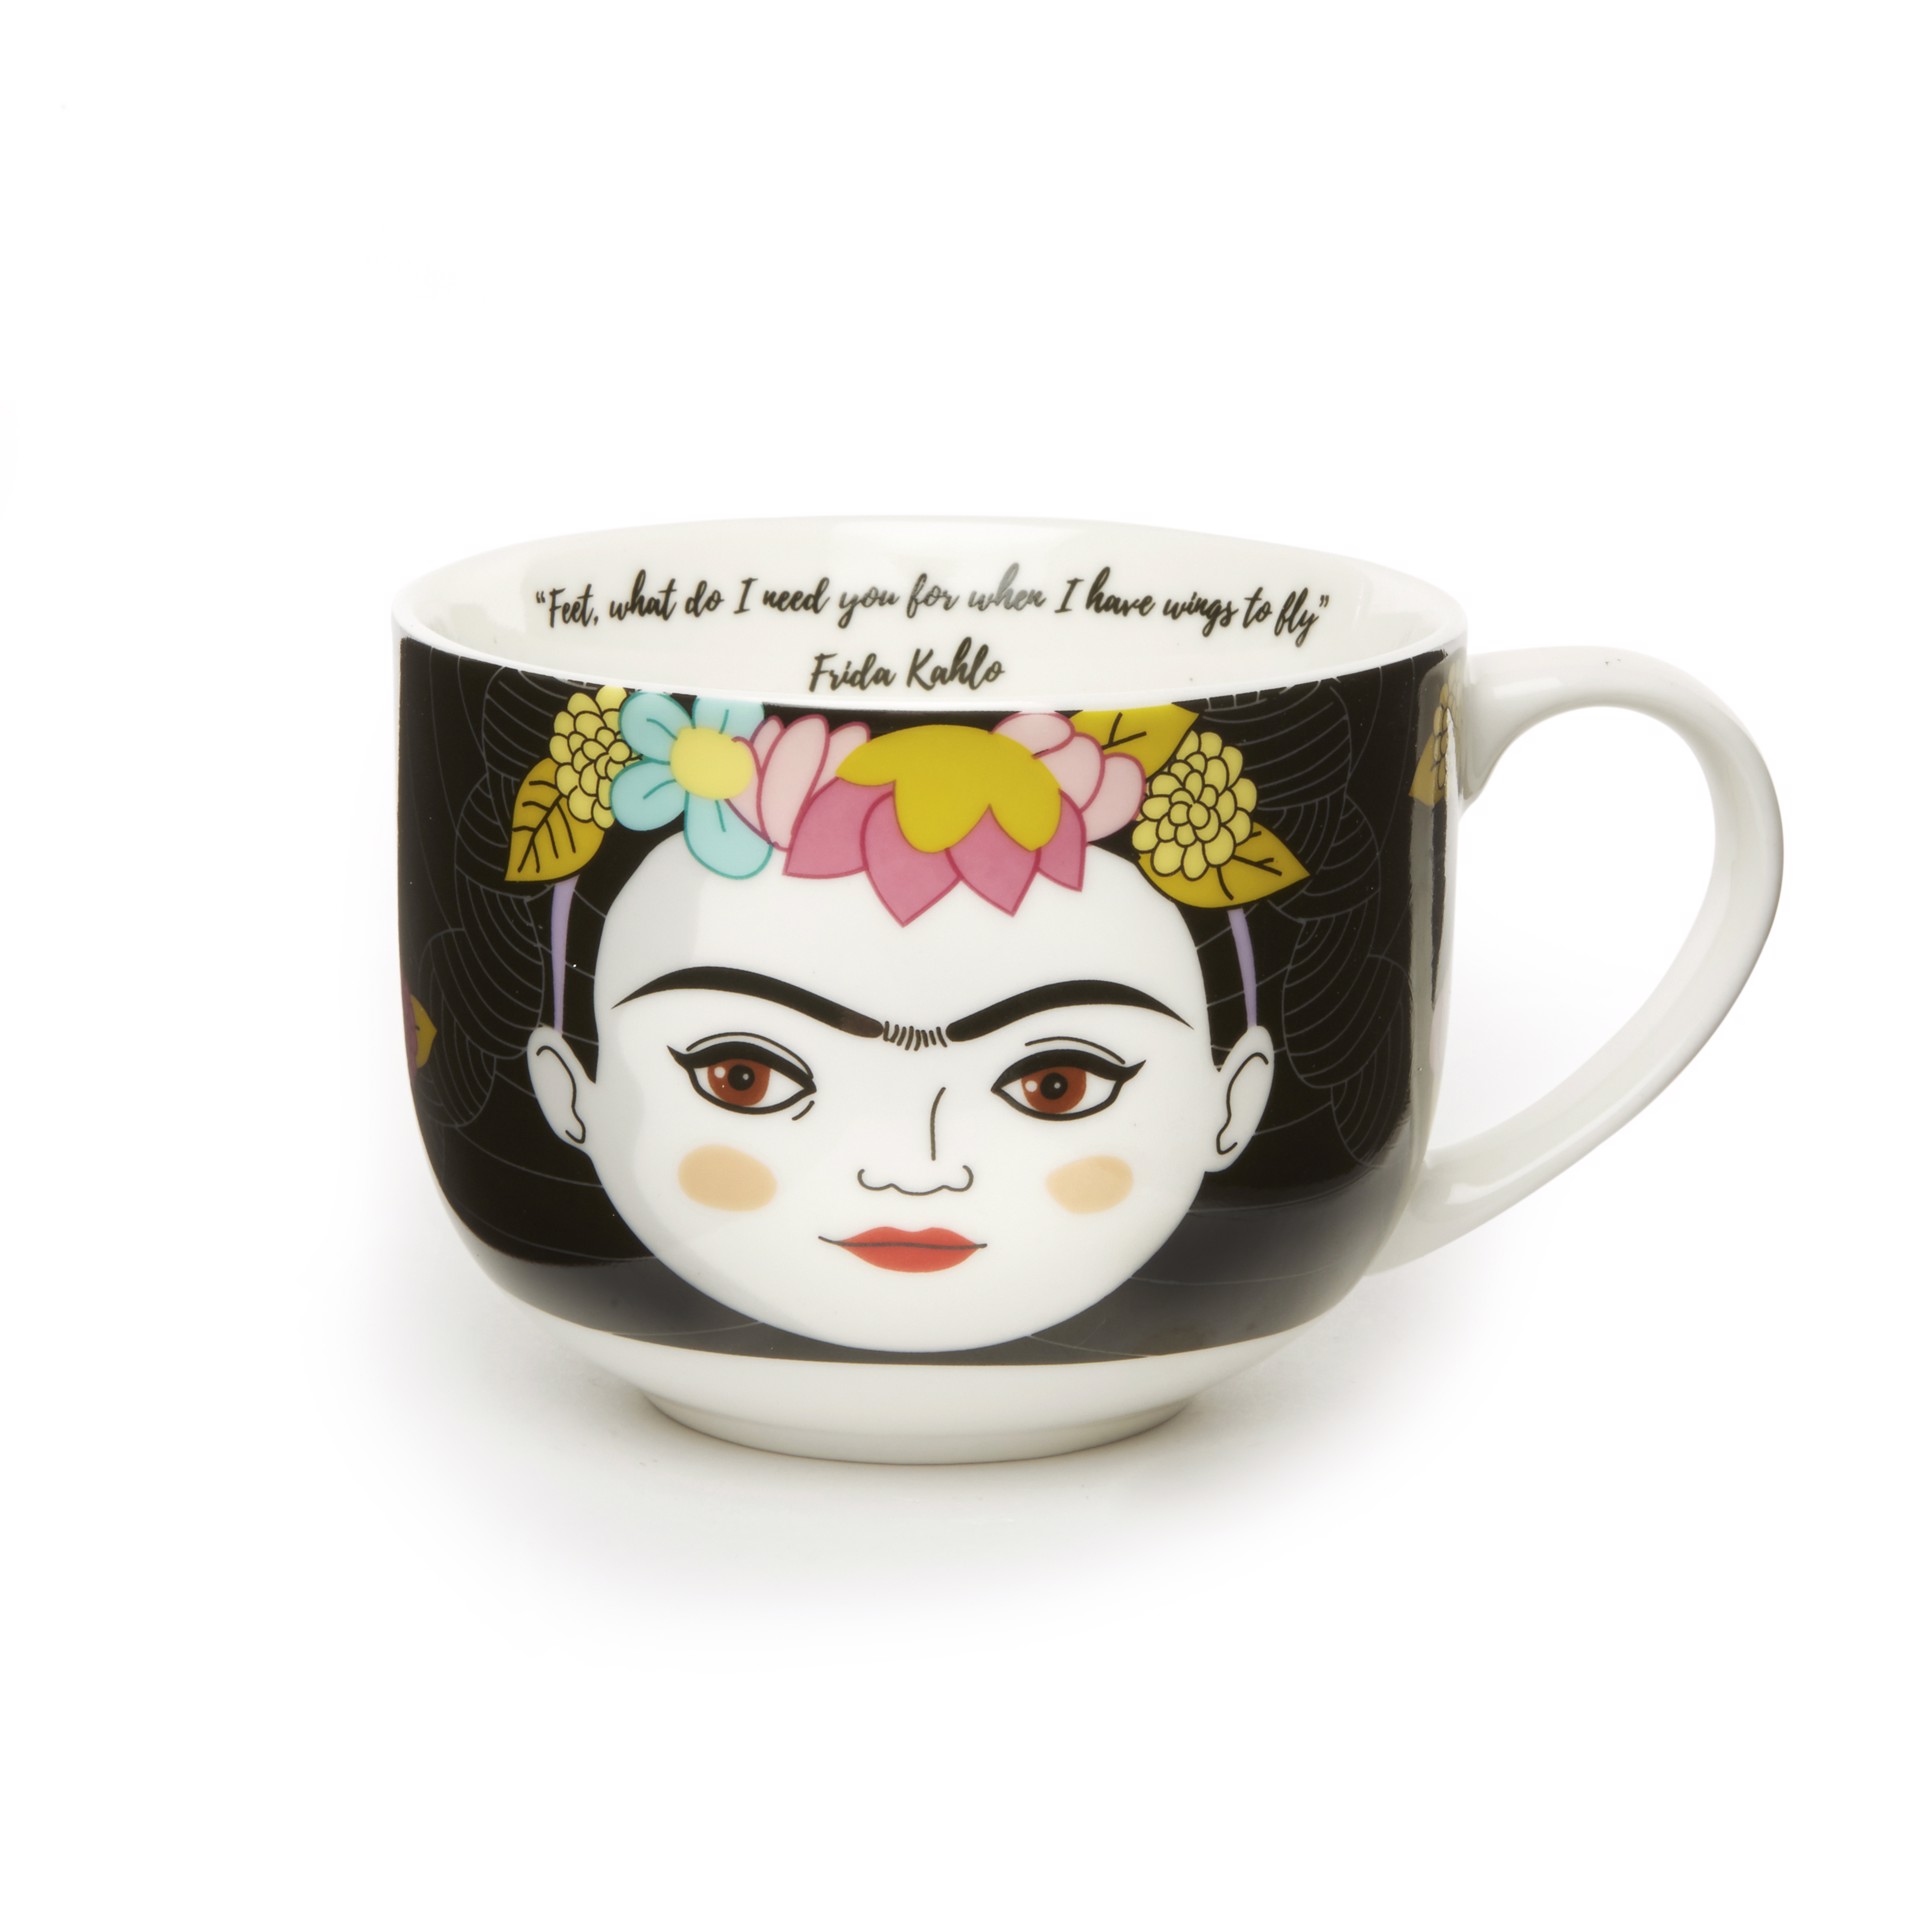 Frida Kahlo Mug by Chauvet Arts